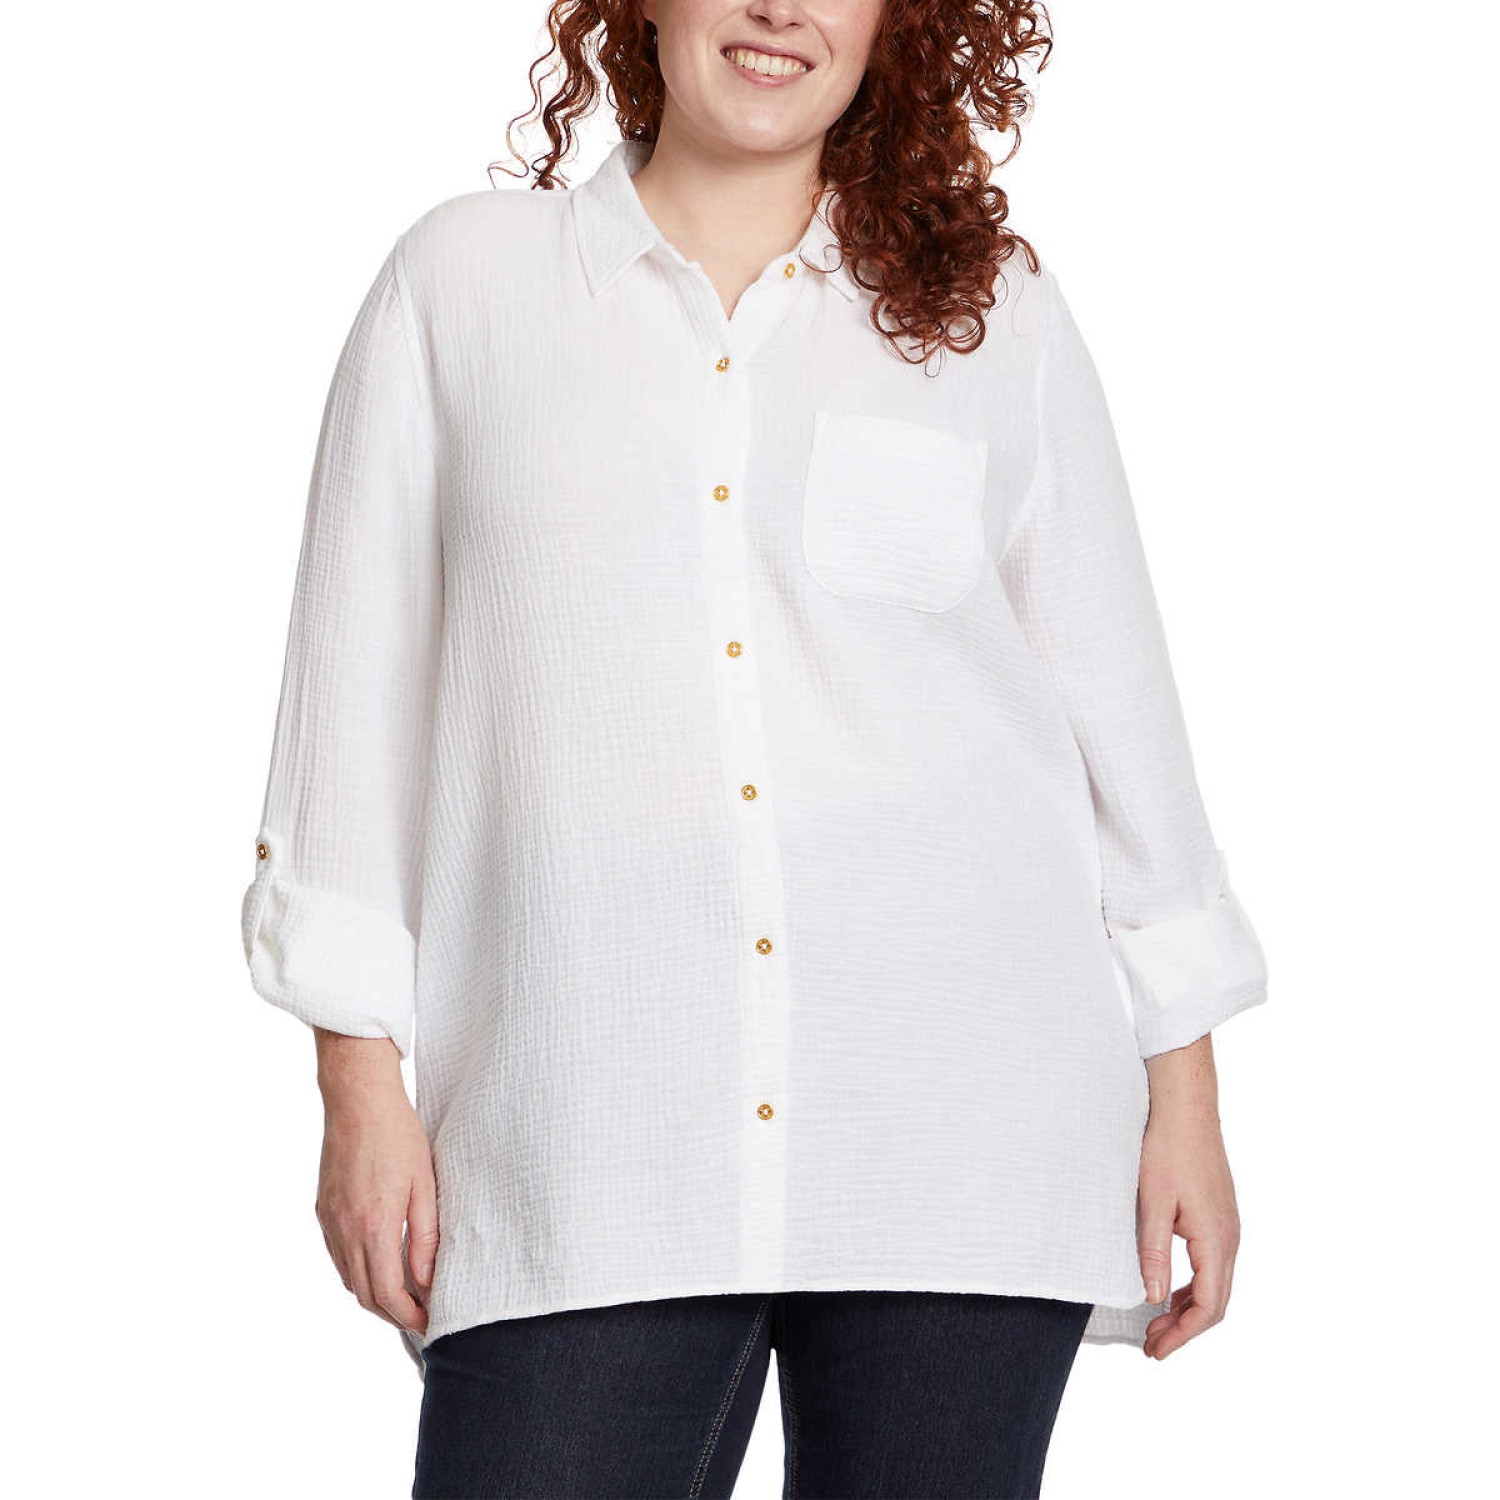 Anne Klein Ladies' Gauze Button Up Top, White, Large